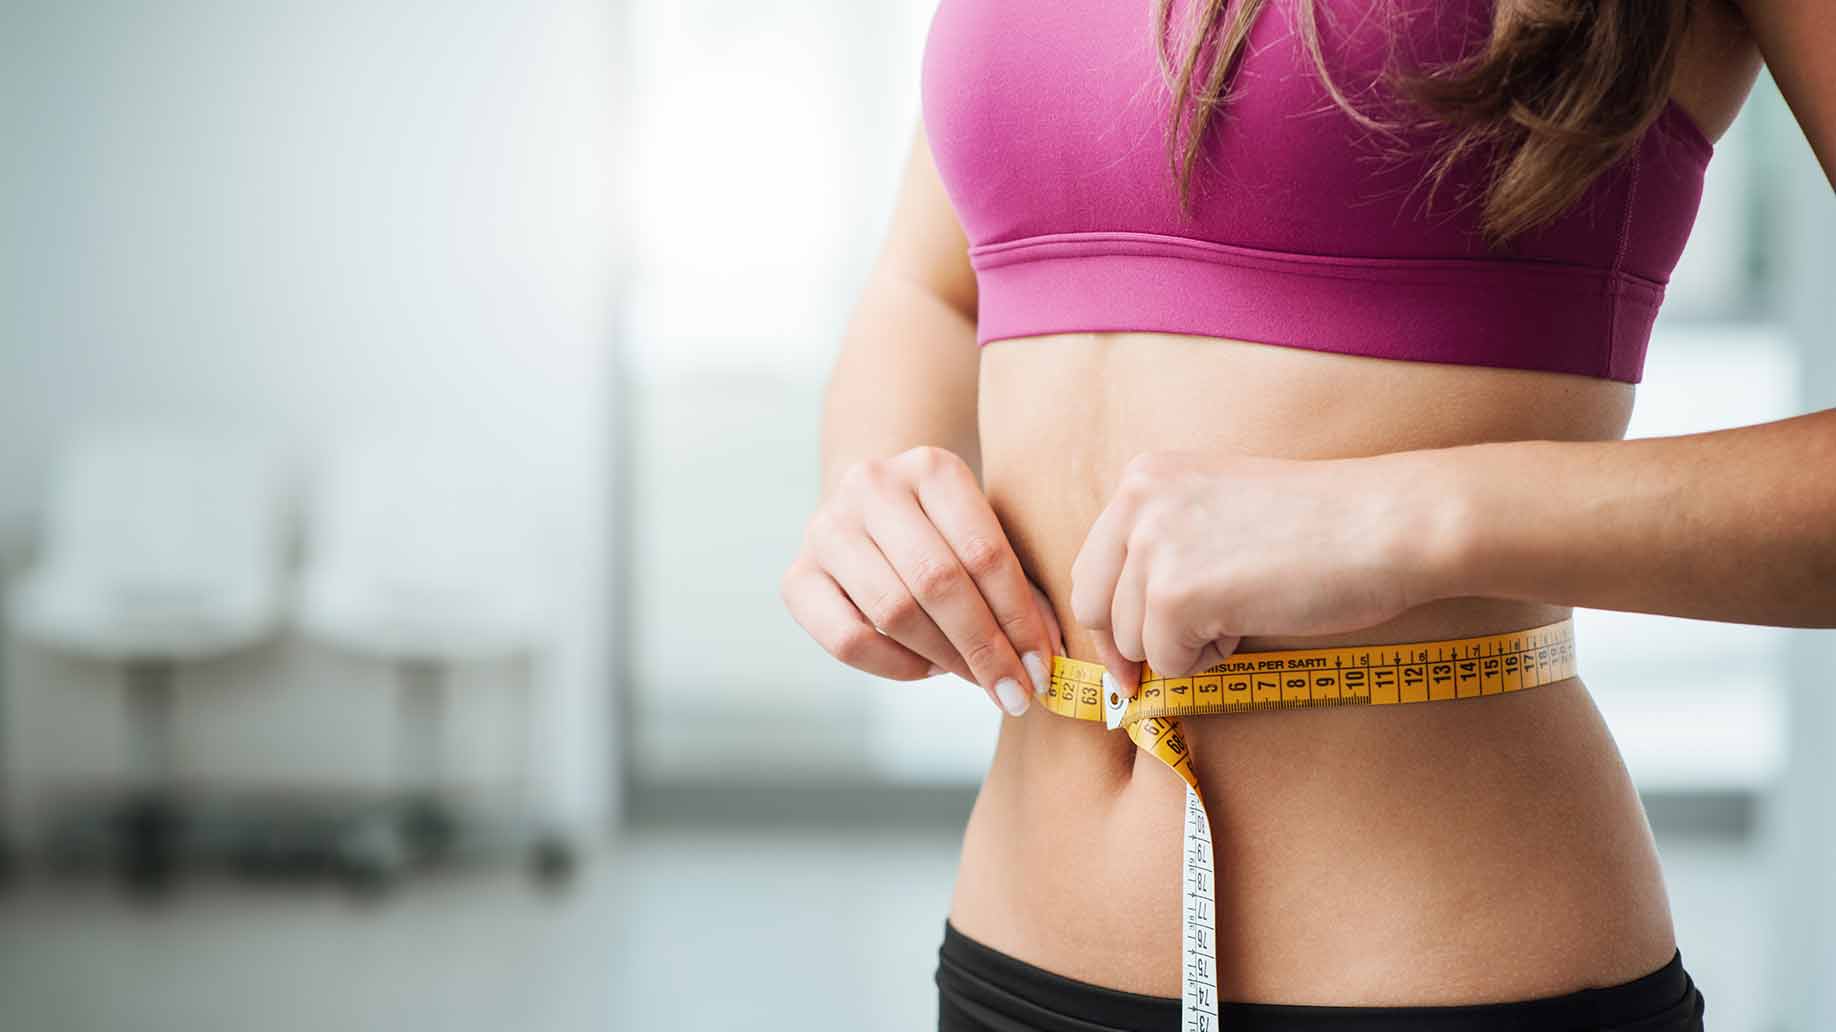 keto-diet-weight-loss